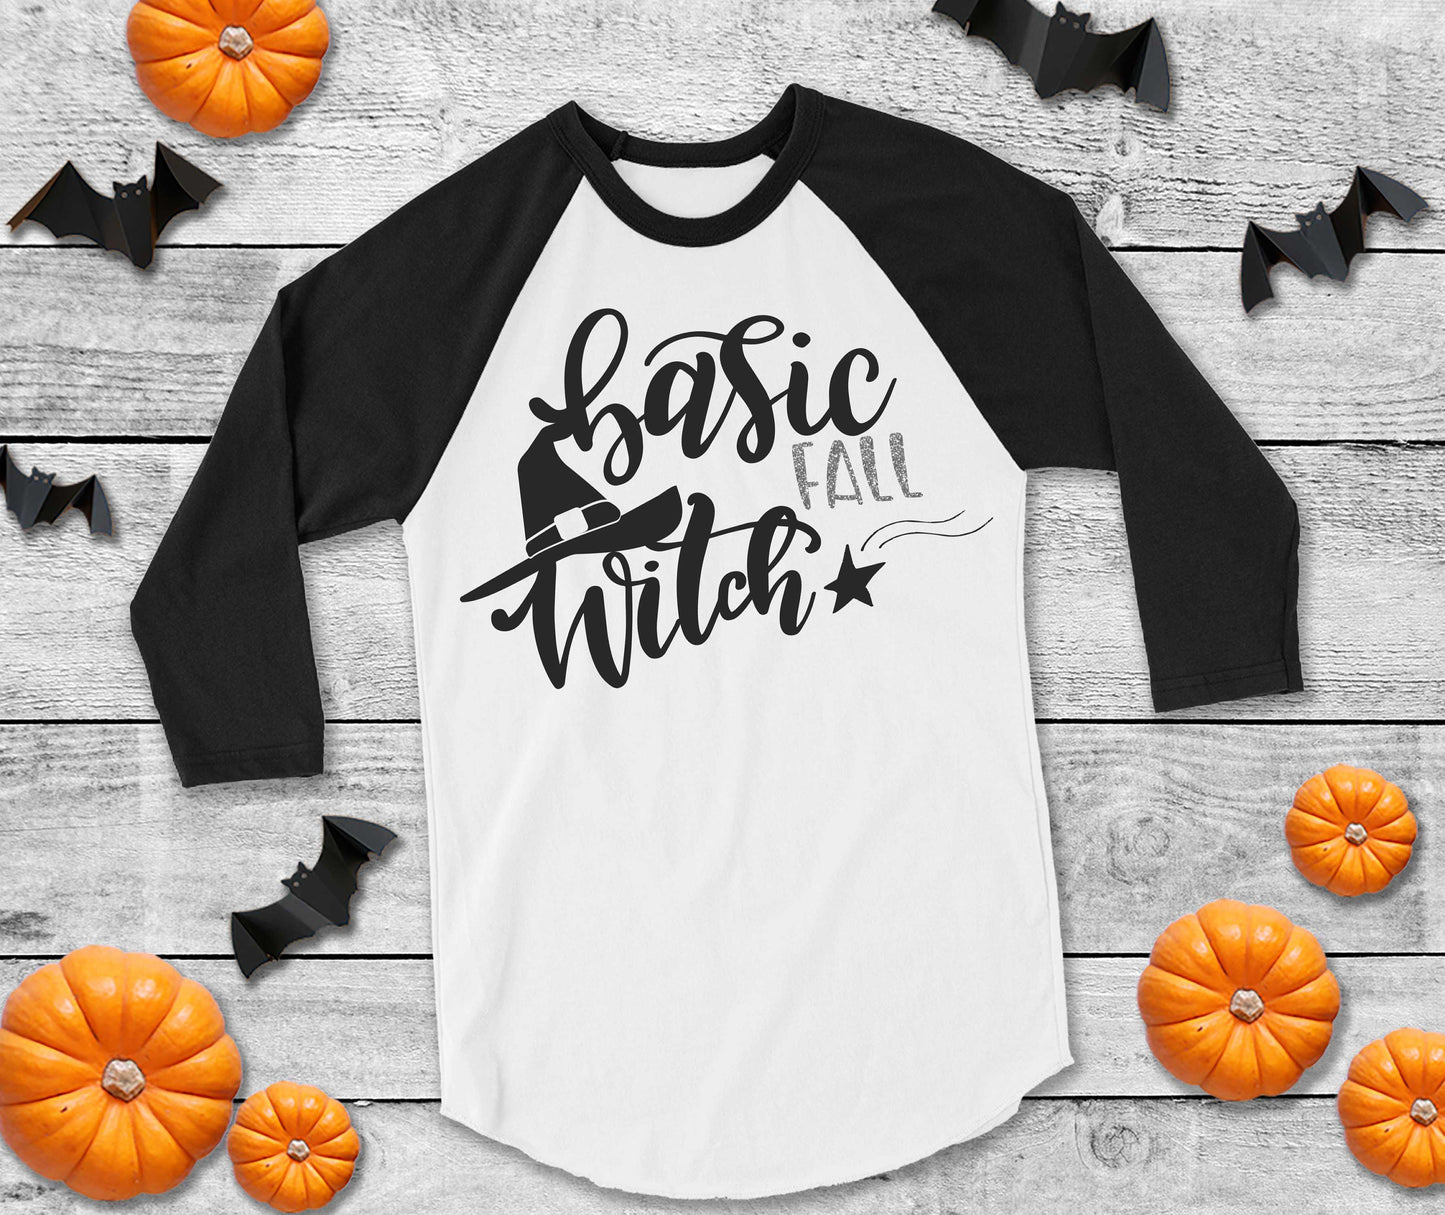 Basic Fall Witch raglan t-shirt - basic witch shirt - halloween shirt - hocus pocus shirt - witch halloween shirt - funny witch shirt